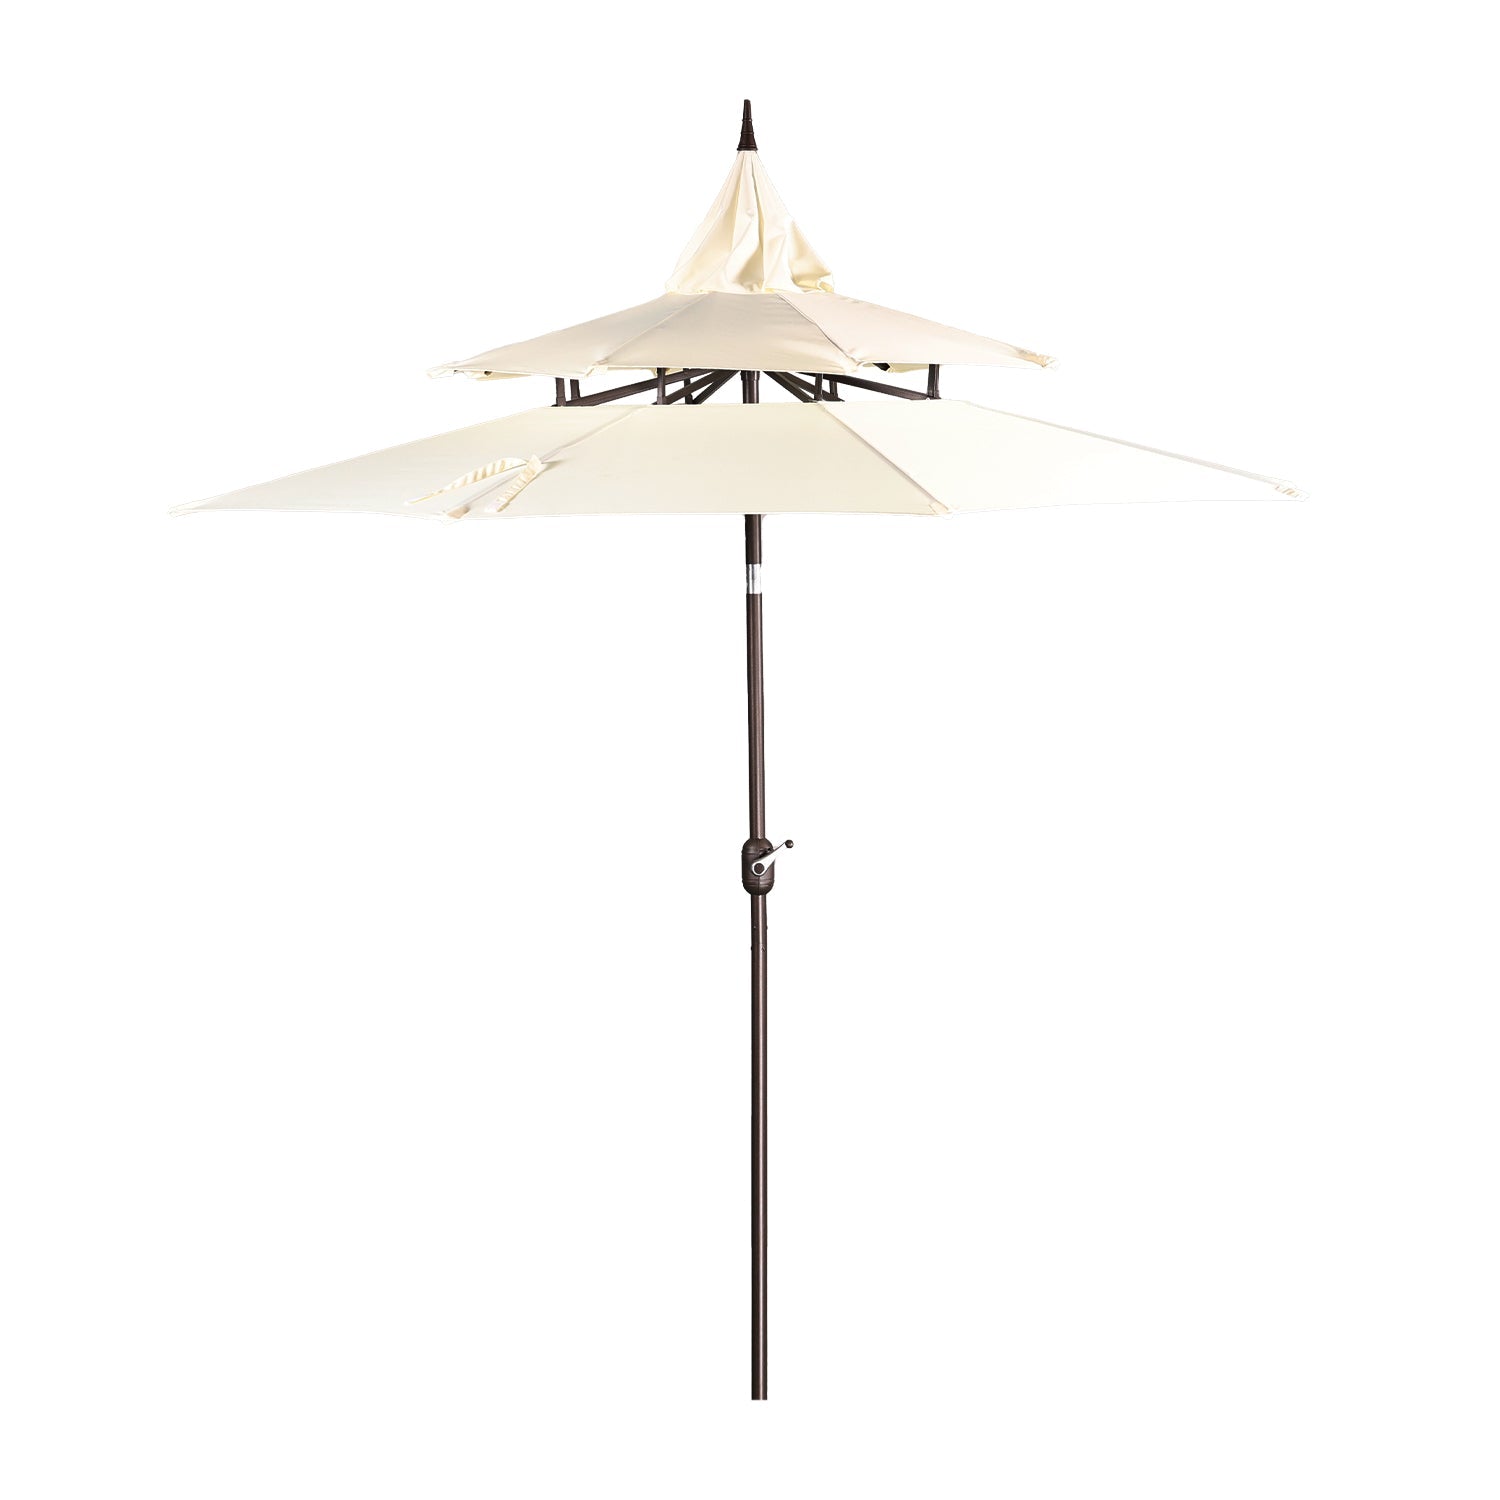 9FT 3-Tier Patio Umbrella with Crank Lift - Outdoor Table Umbrella - Sun Protection with 8 Ribs Patio Umbrella Aoodor LLC Beige  